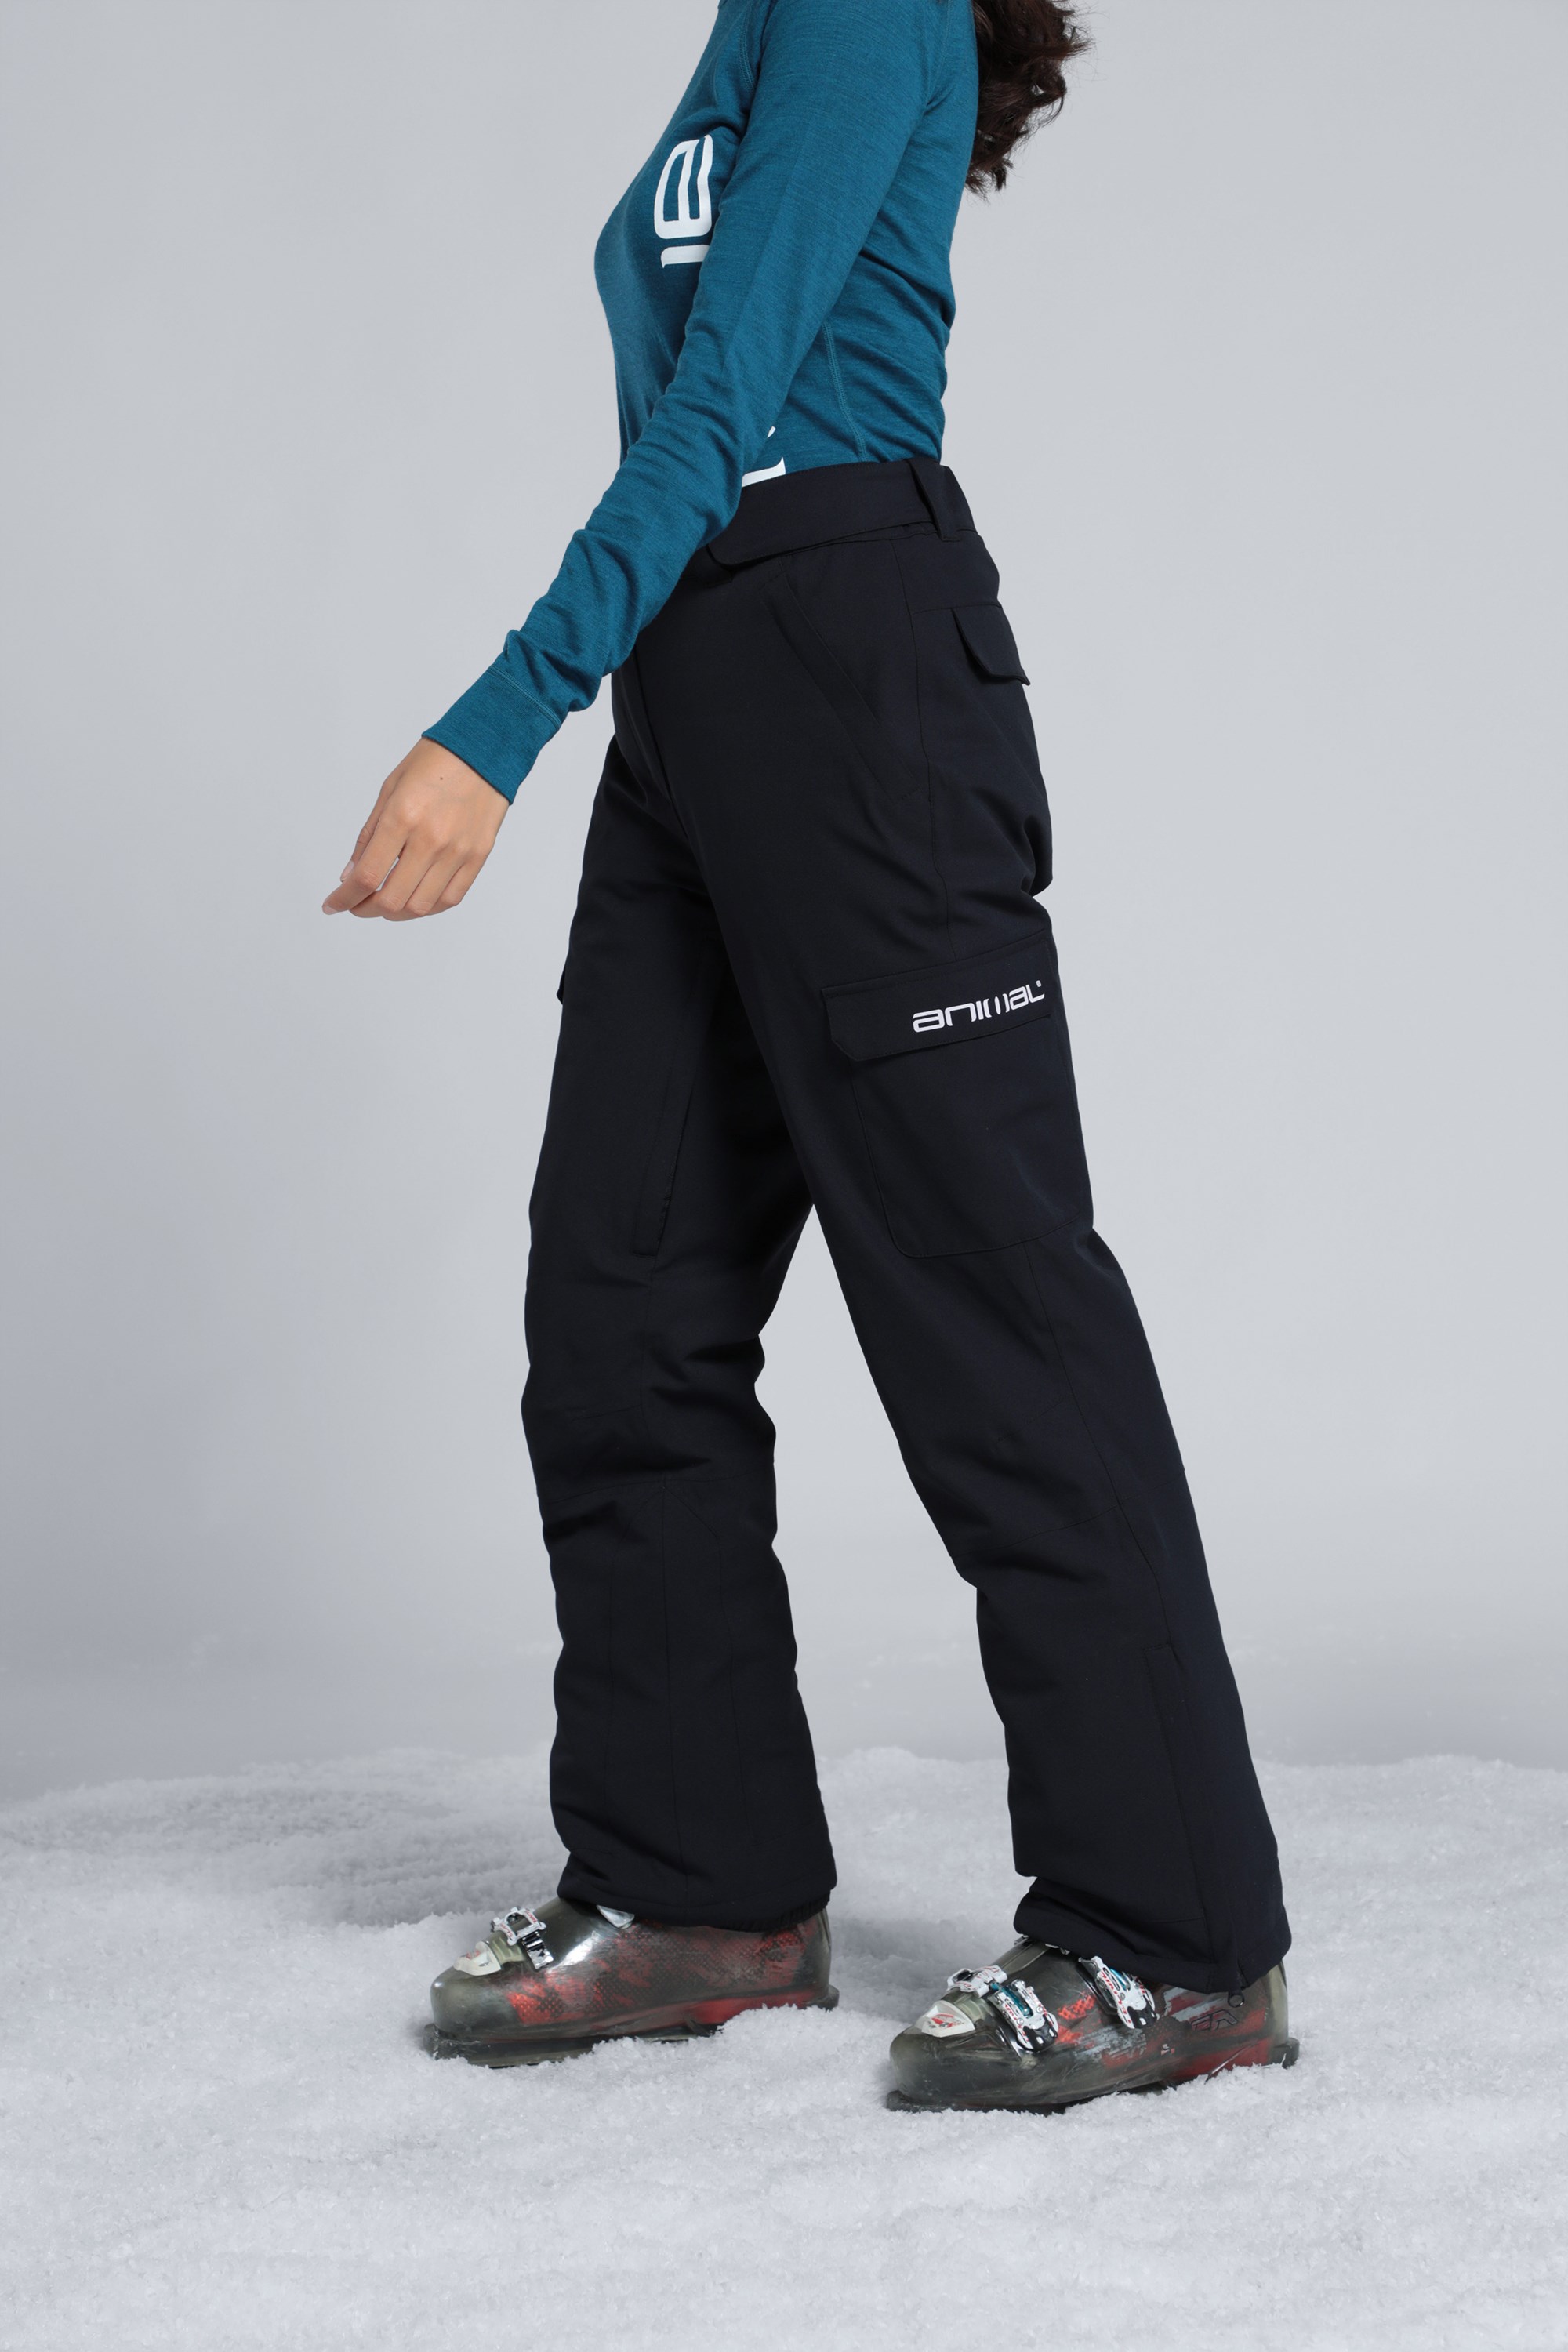 Stylish Women's Ski Pants in Australia - SnowCentral